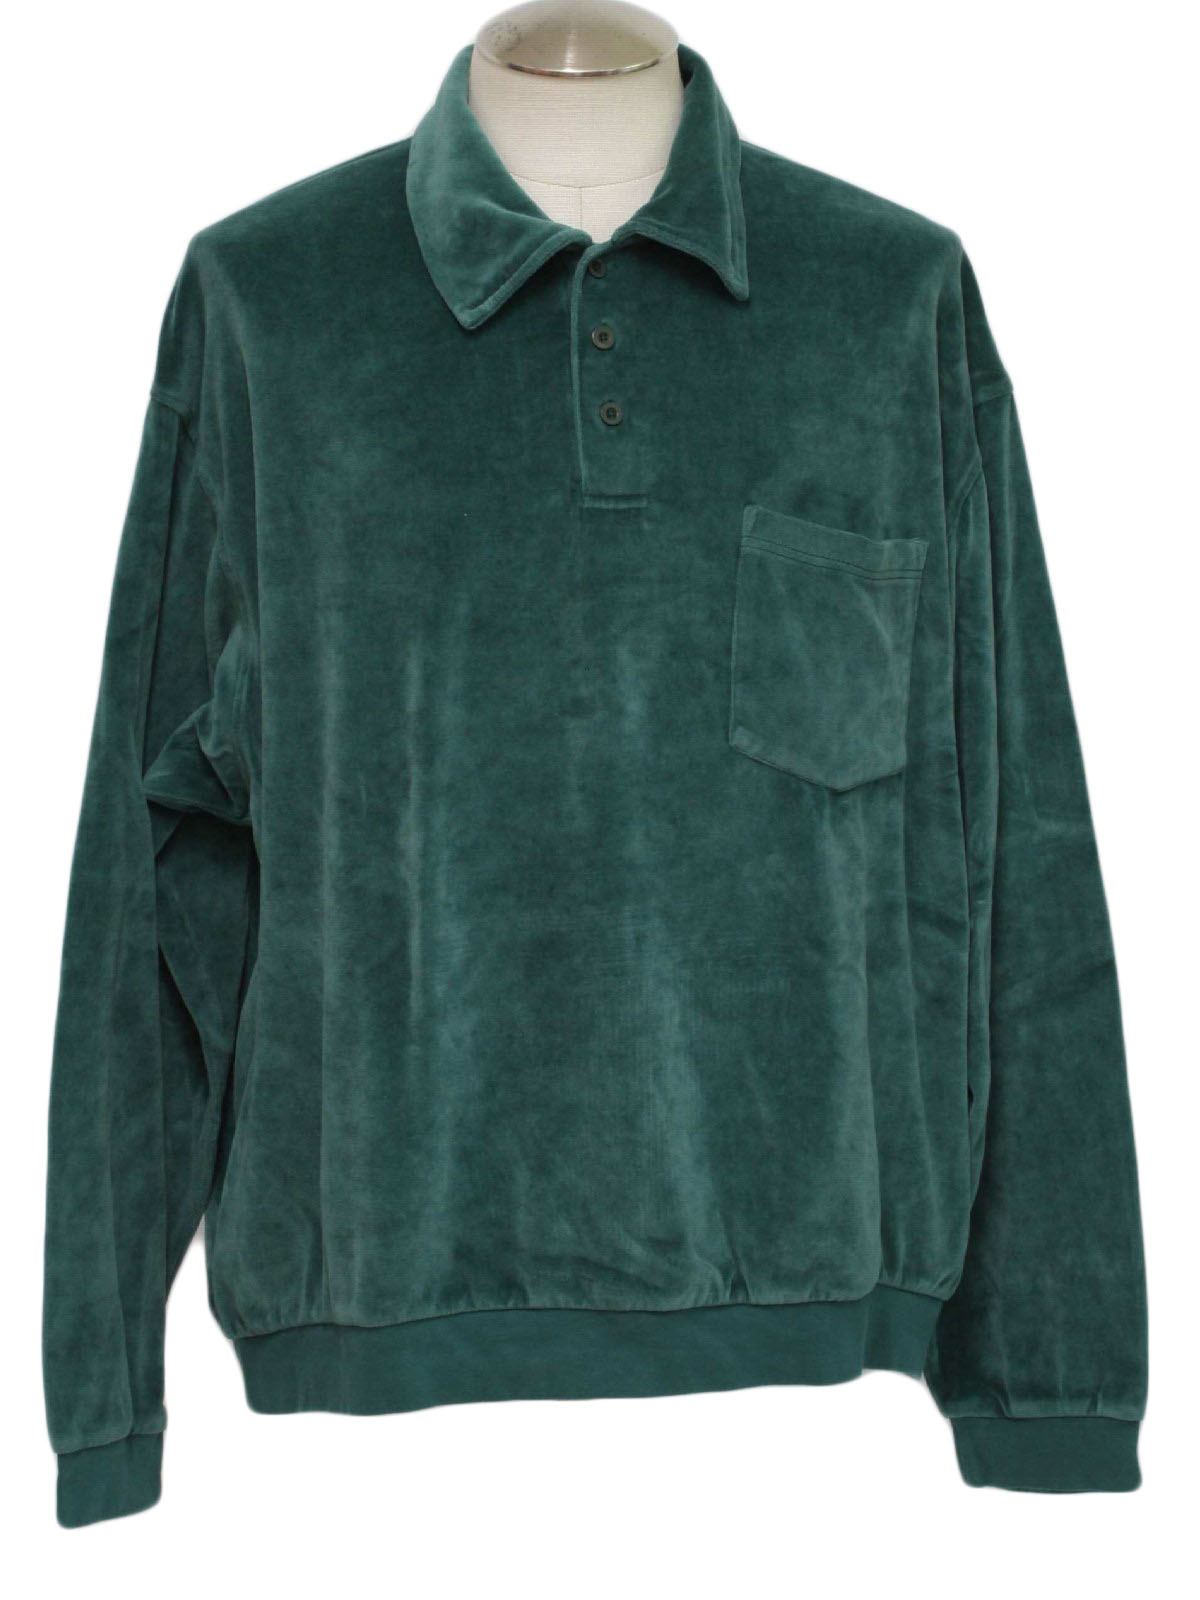 Retro 1980's Velour Shirt (John Blair) : 80s -John Blair- Mens green ...